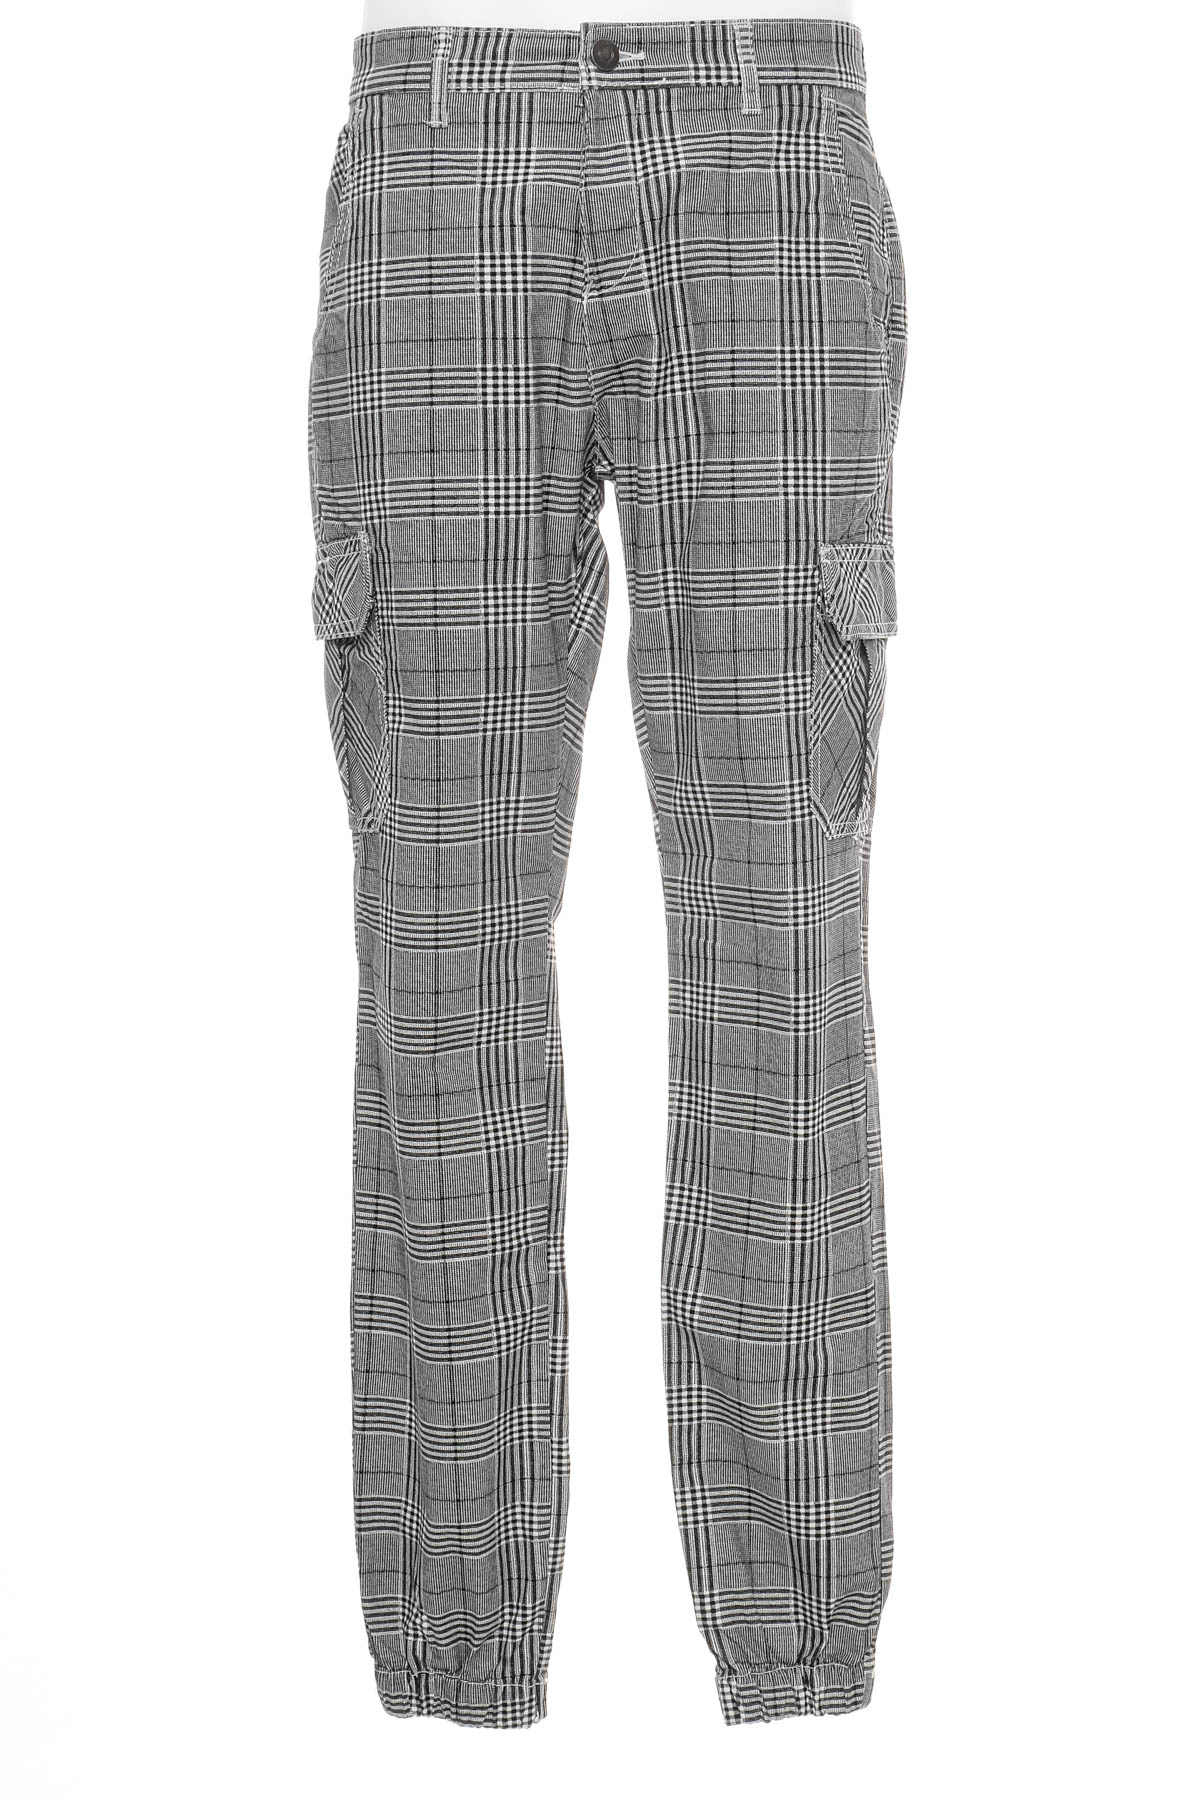 Men's trousers - URBAN CLASSICS - 0